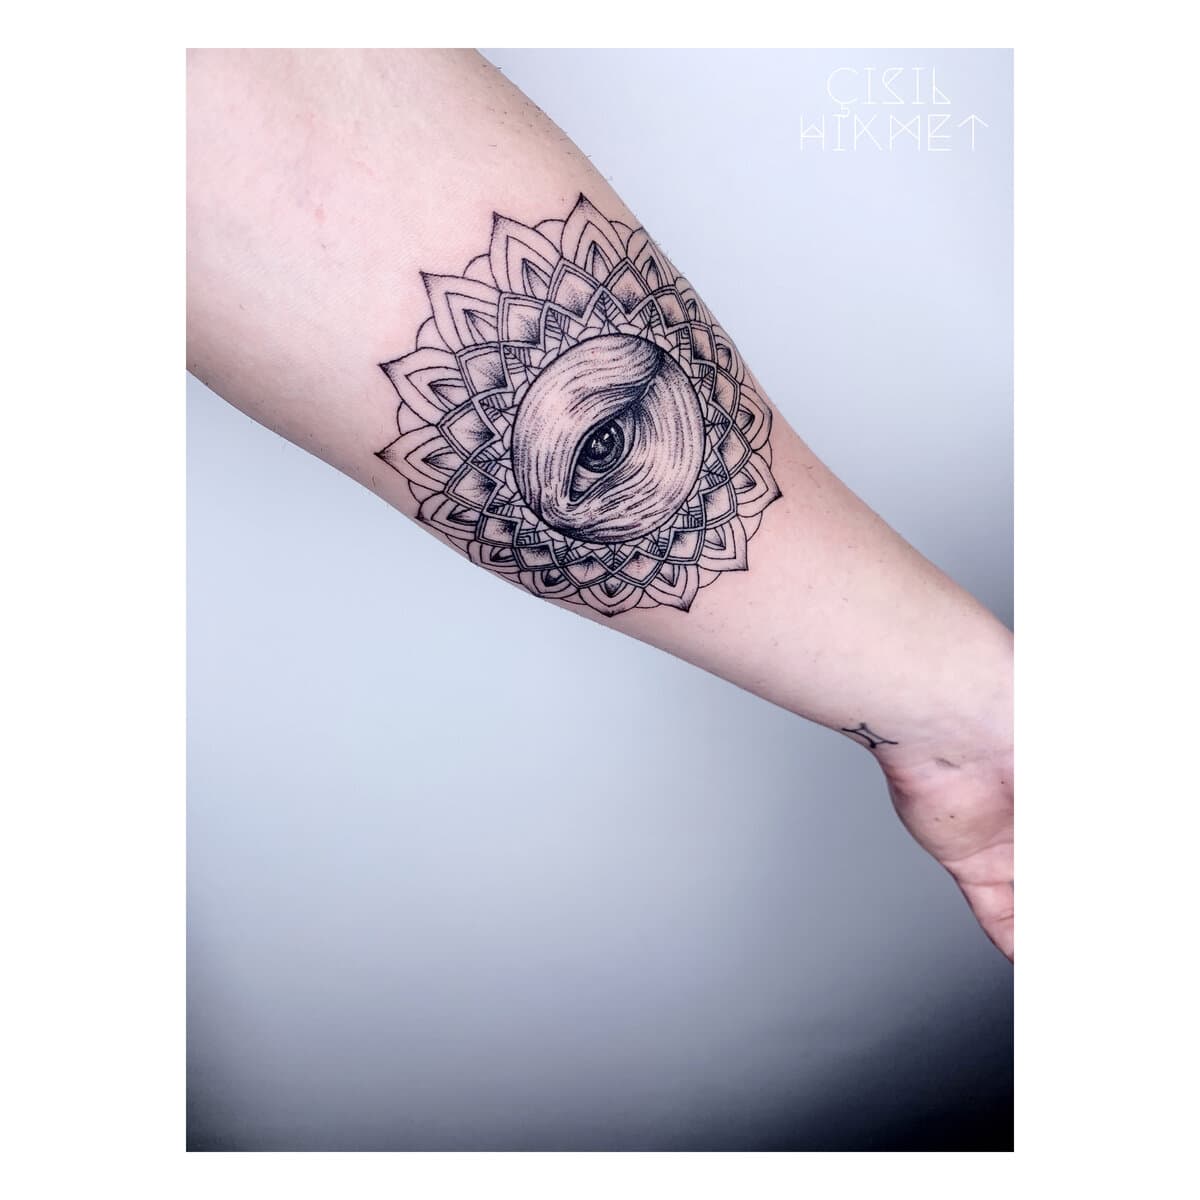 çisil-hikmet-tattoo-artist-ornamental-eye